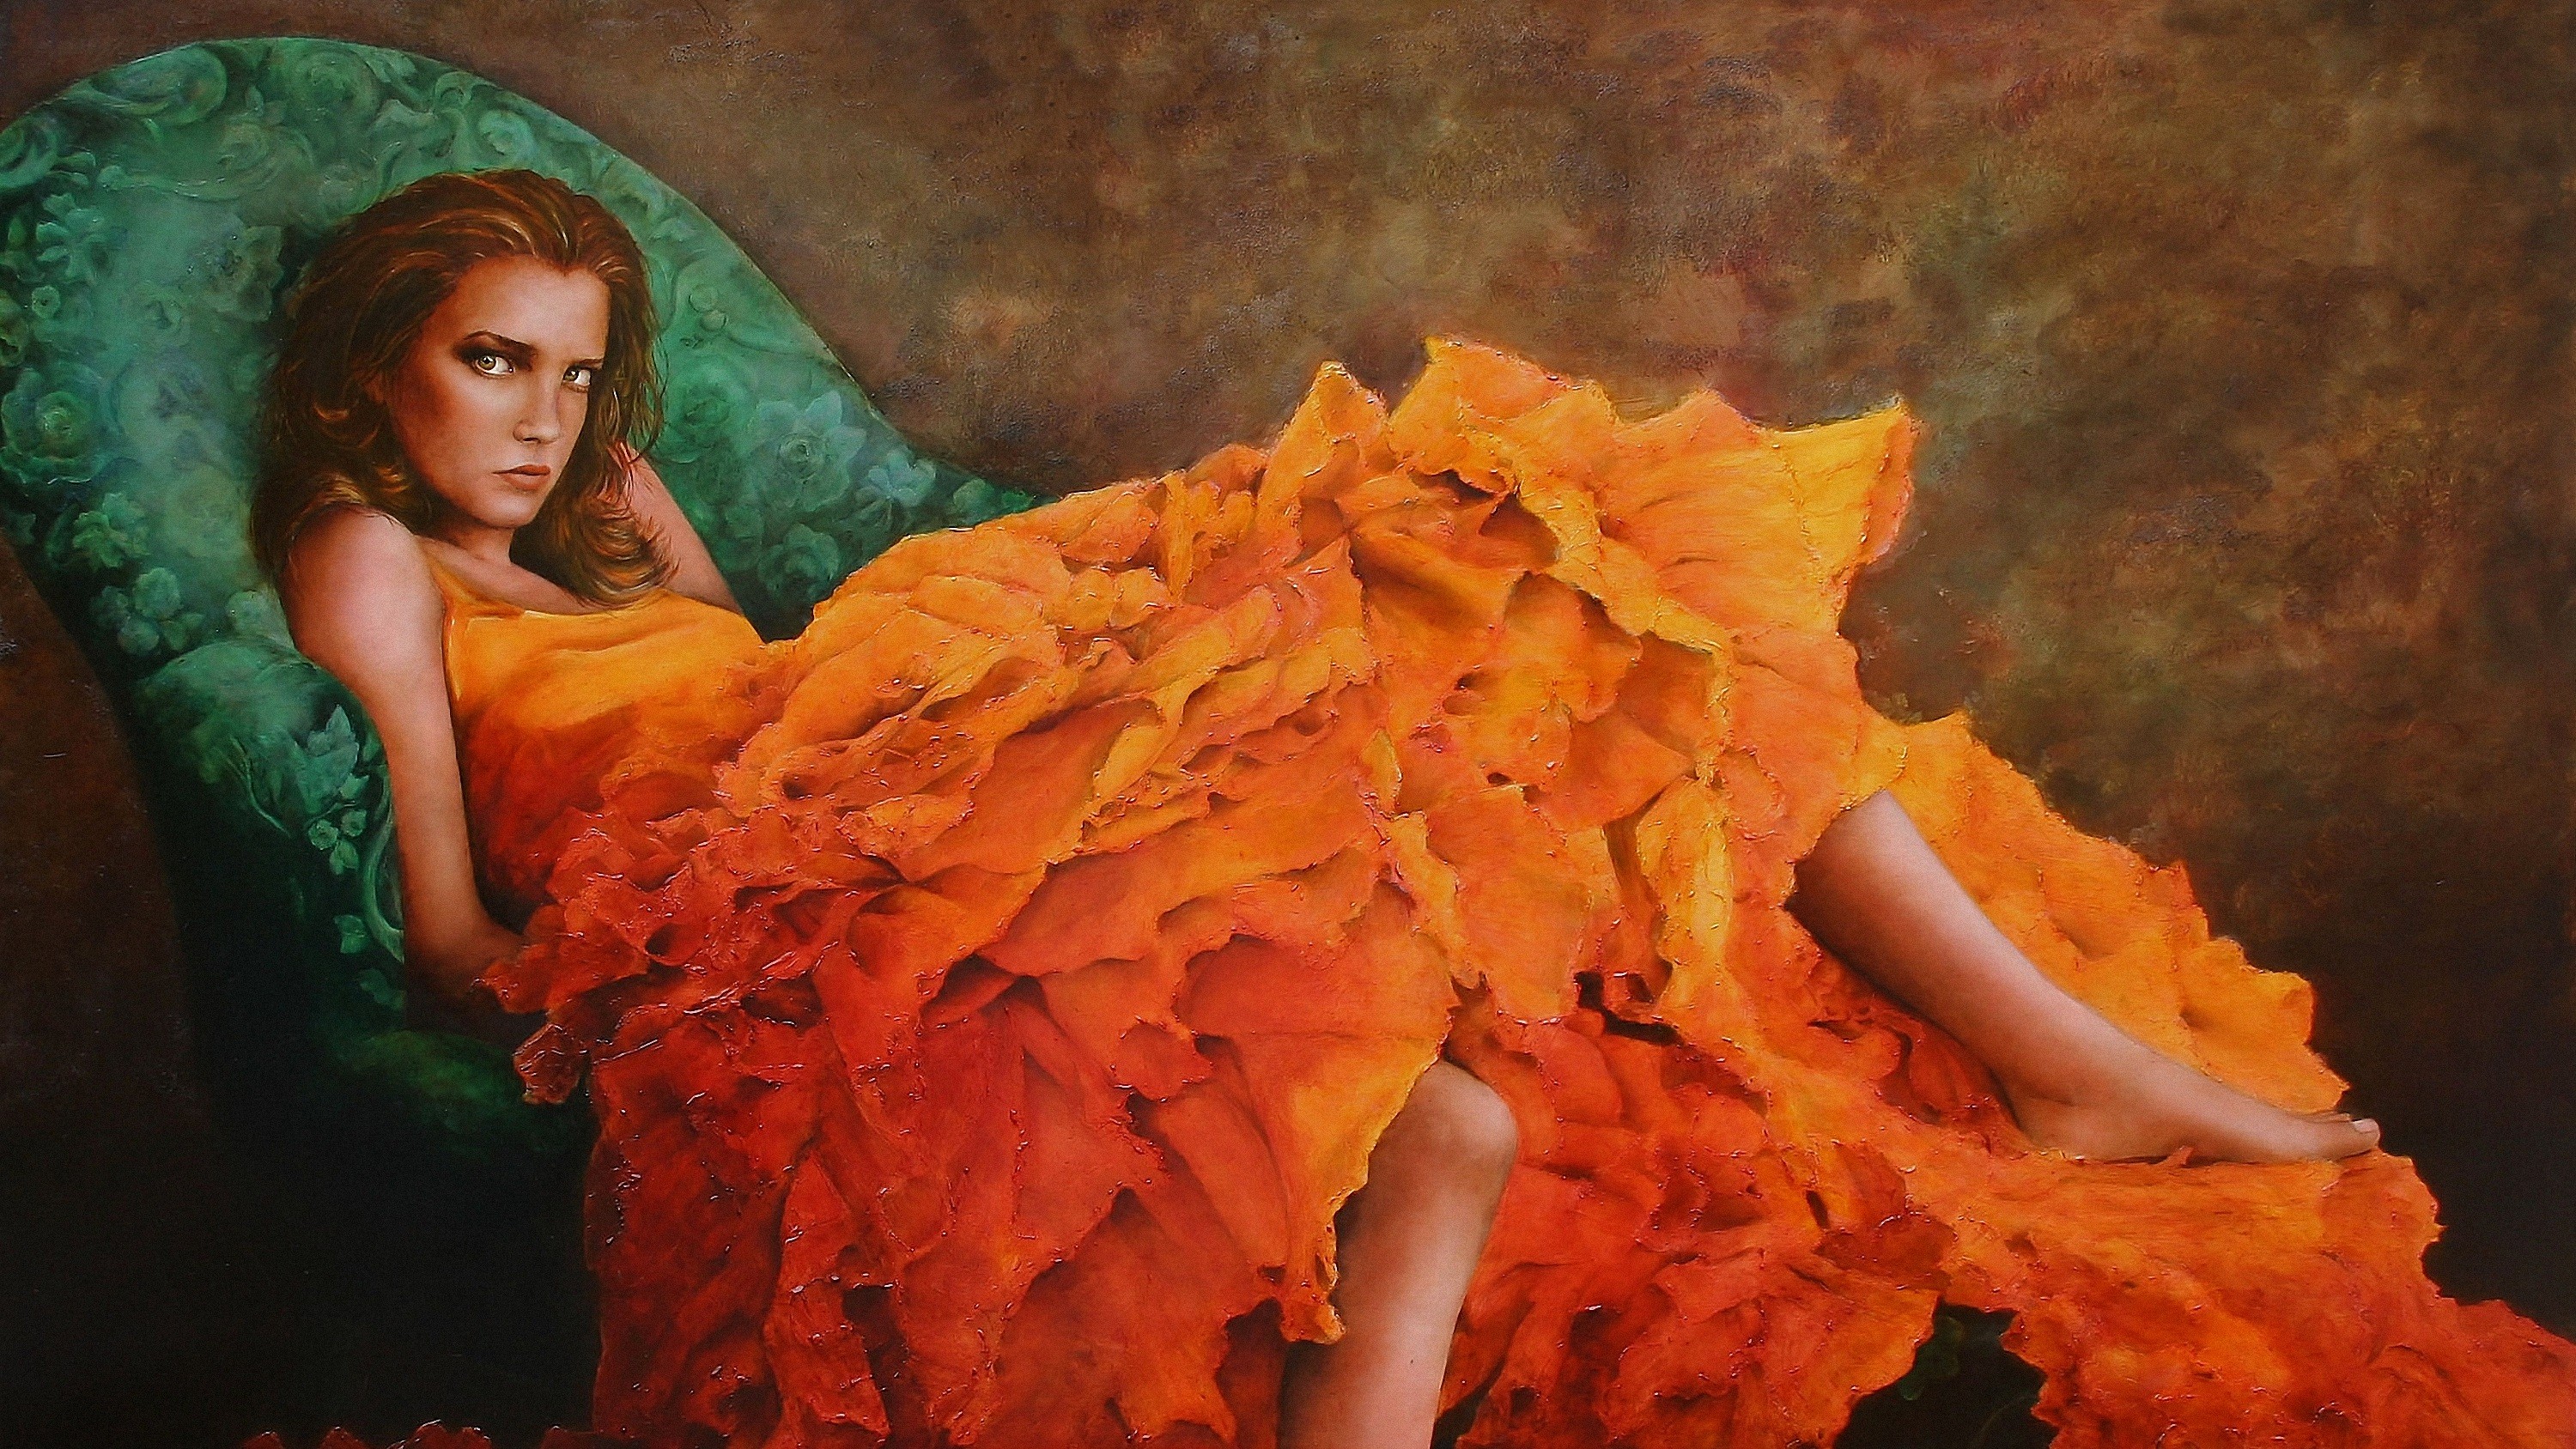 General 3000x1688 women portrait painting artwork orange dress dress